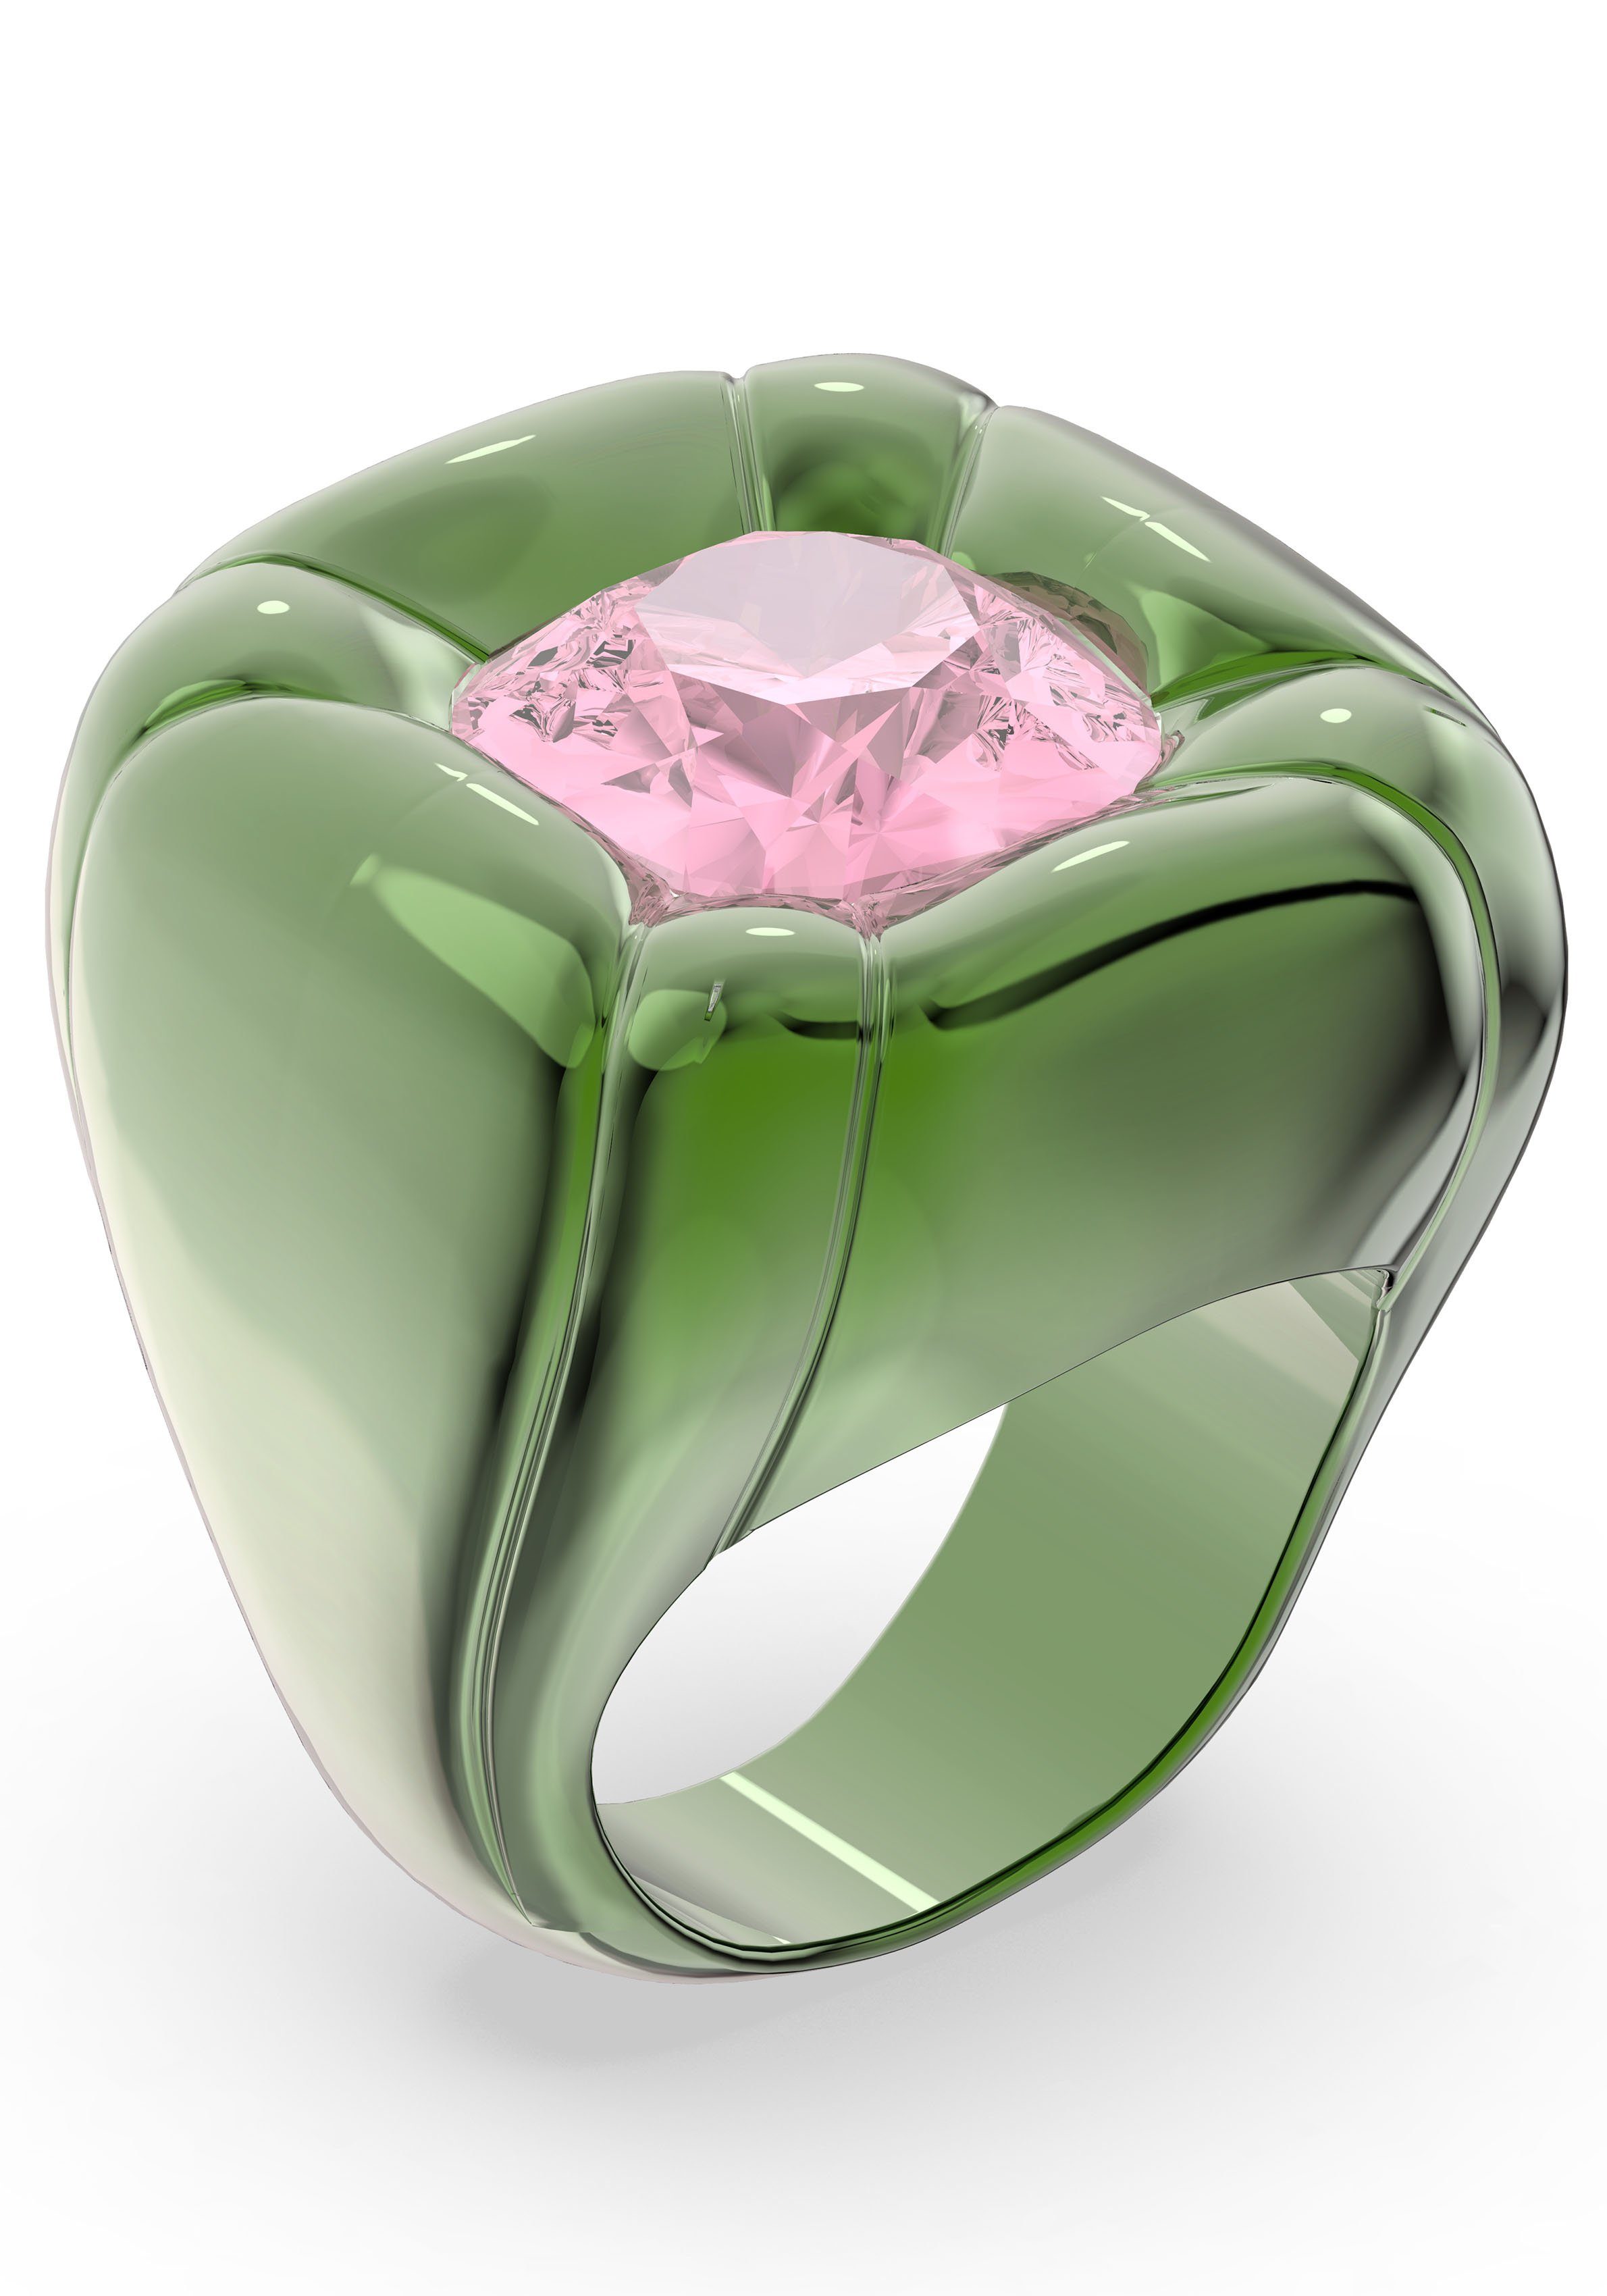 Swarovski Fingerring Dulcis Cocktail Ring, 5610803,5609721, 5610804,5609725, mit Swarovski® Kristall grün-rosa